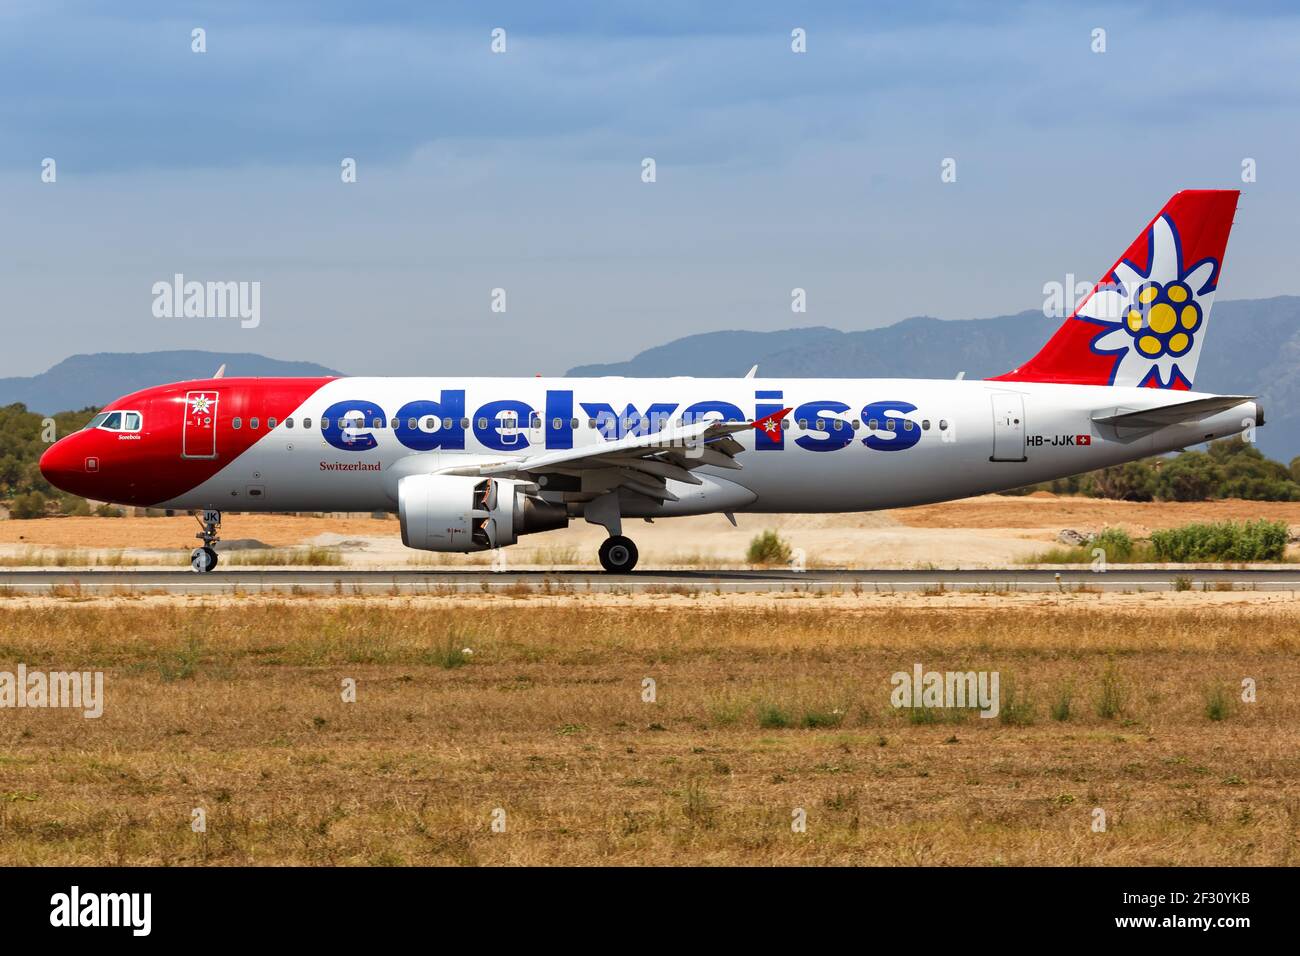 Palma de Mallorca, Spain - July 22, 2018: Edelweiss Airbus A320 airplane at Palma de Mallorca airport in Spain. Airbus is a European aircraft manufact Stock Photo